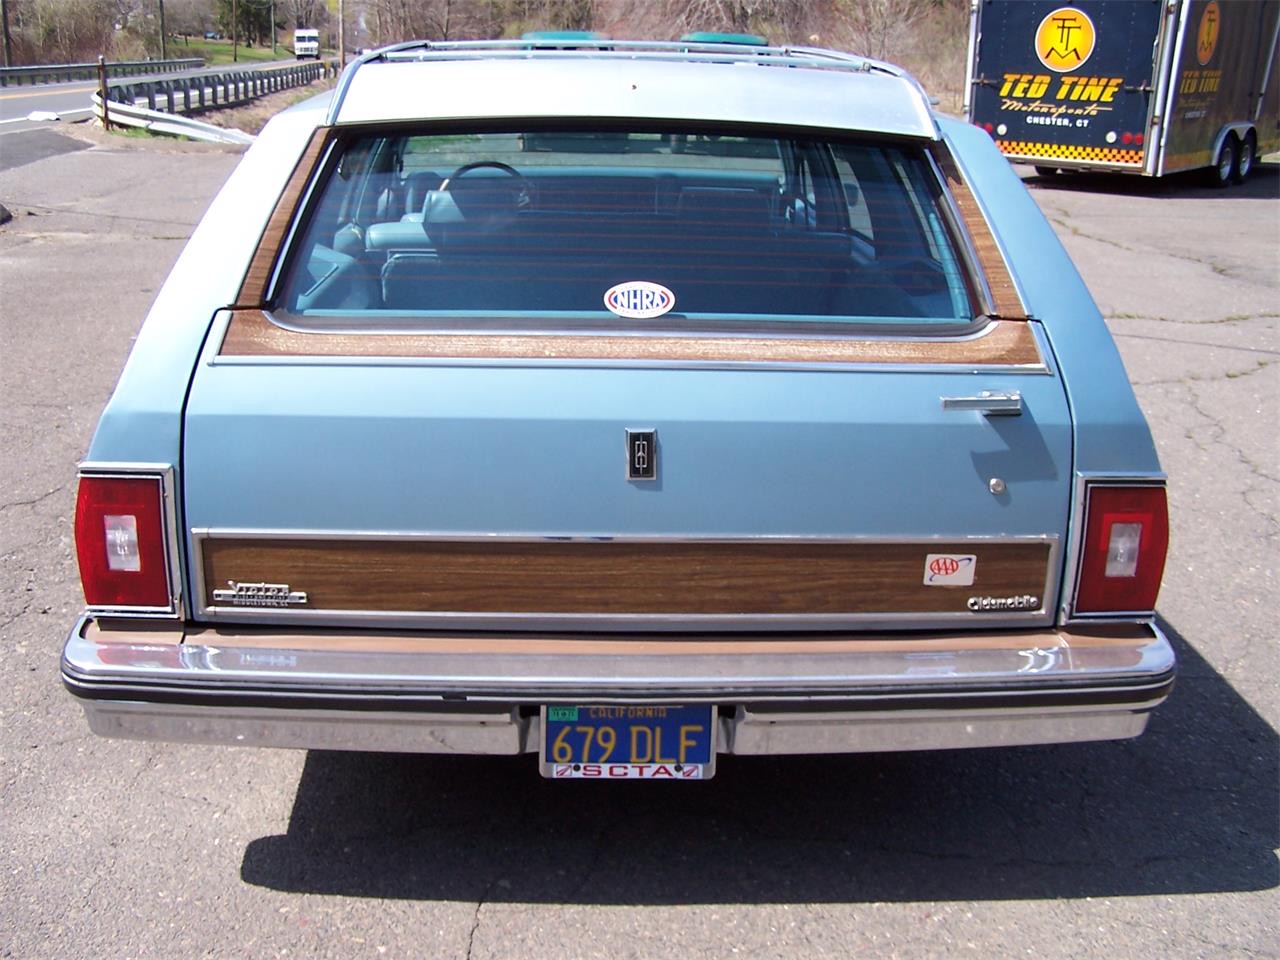 '78 station wagon, School teacher’s ’78 station wagon, ClassicCars.com Journal